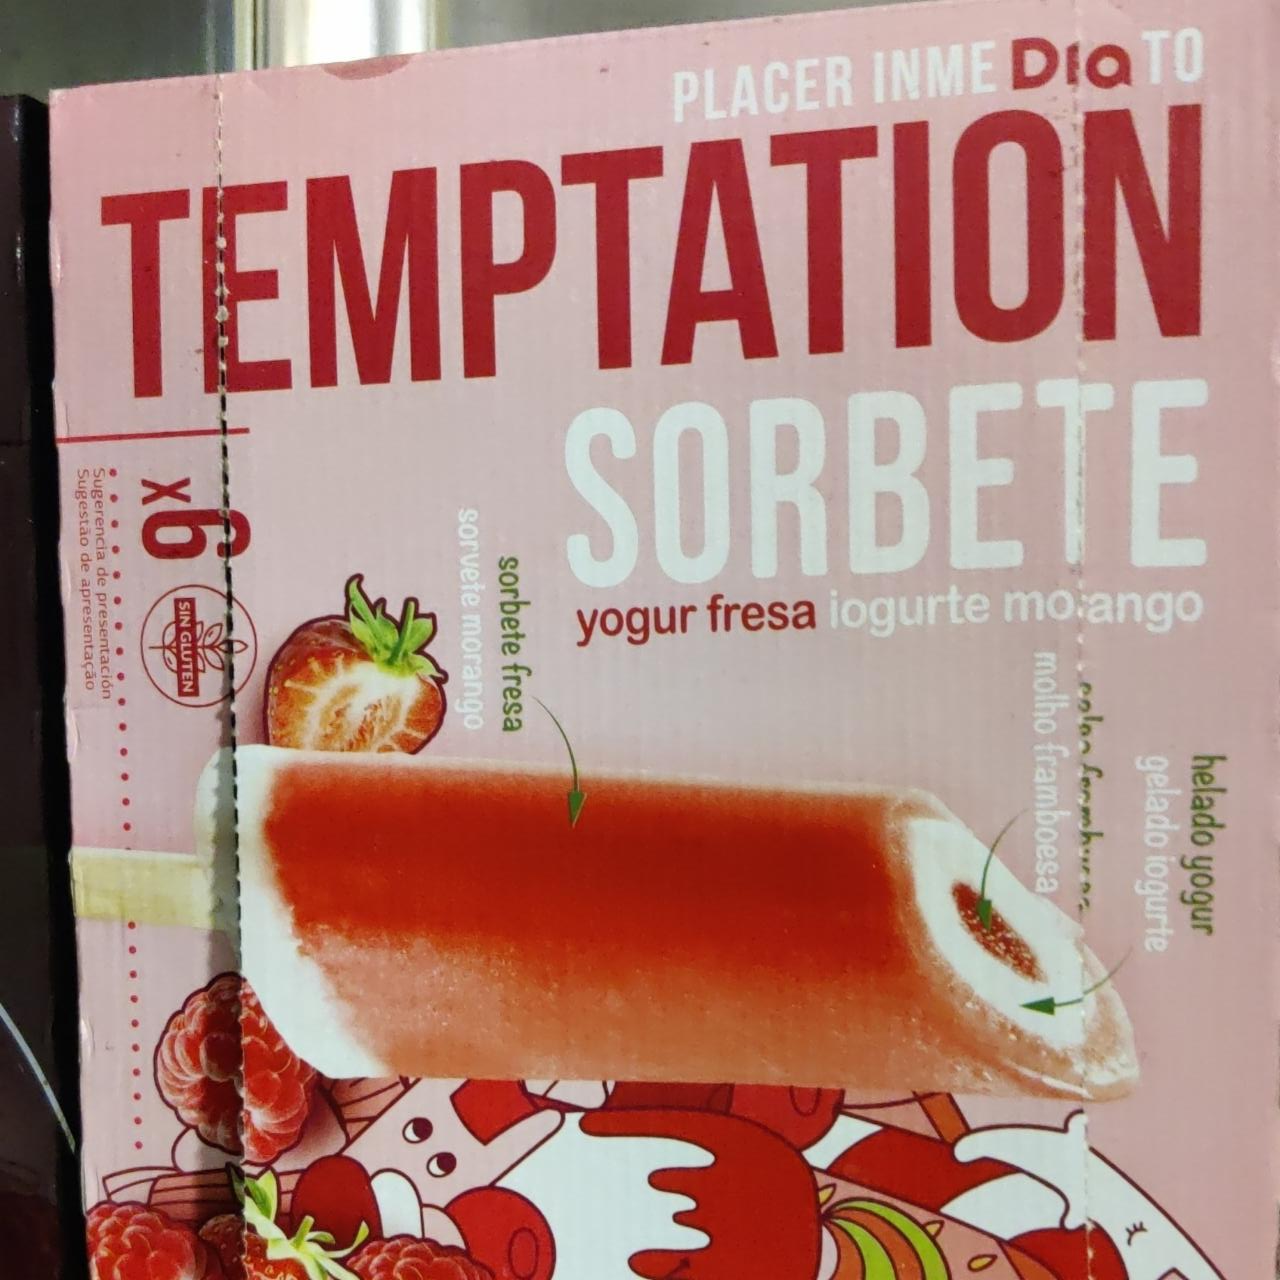 Fotografie - Temptation sorbete yogur fresa Dia